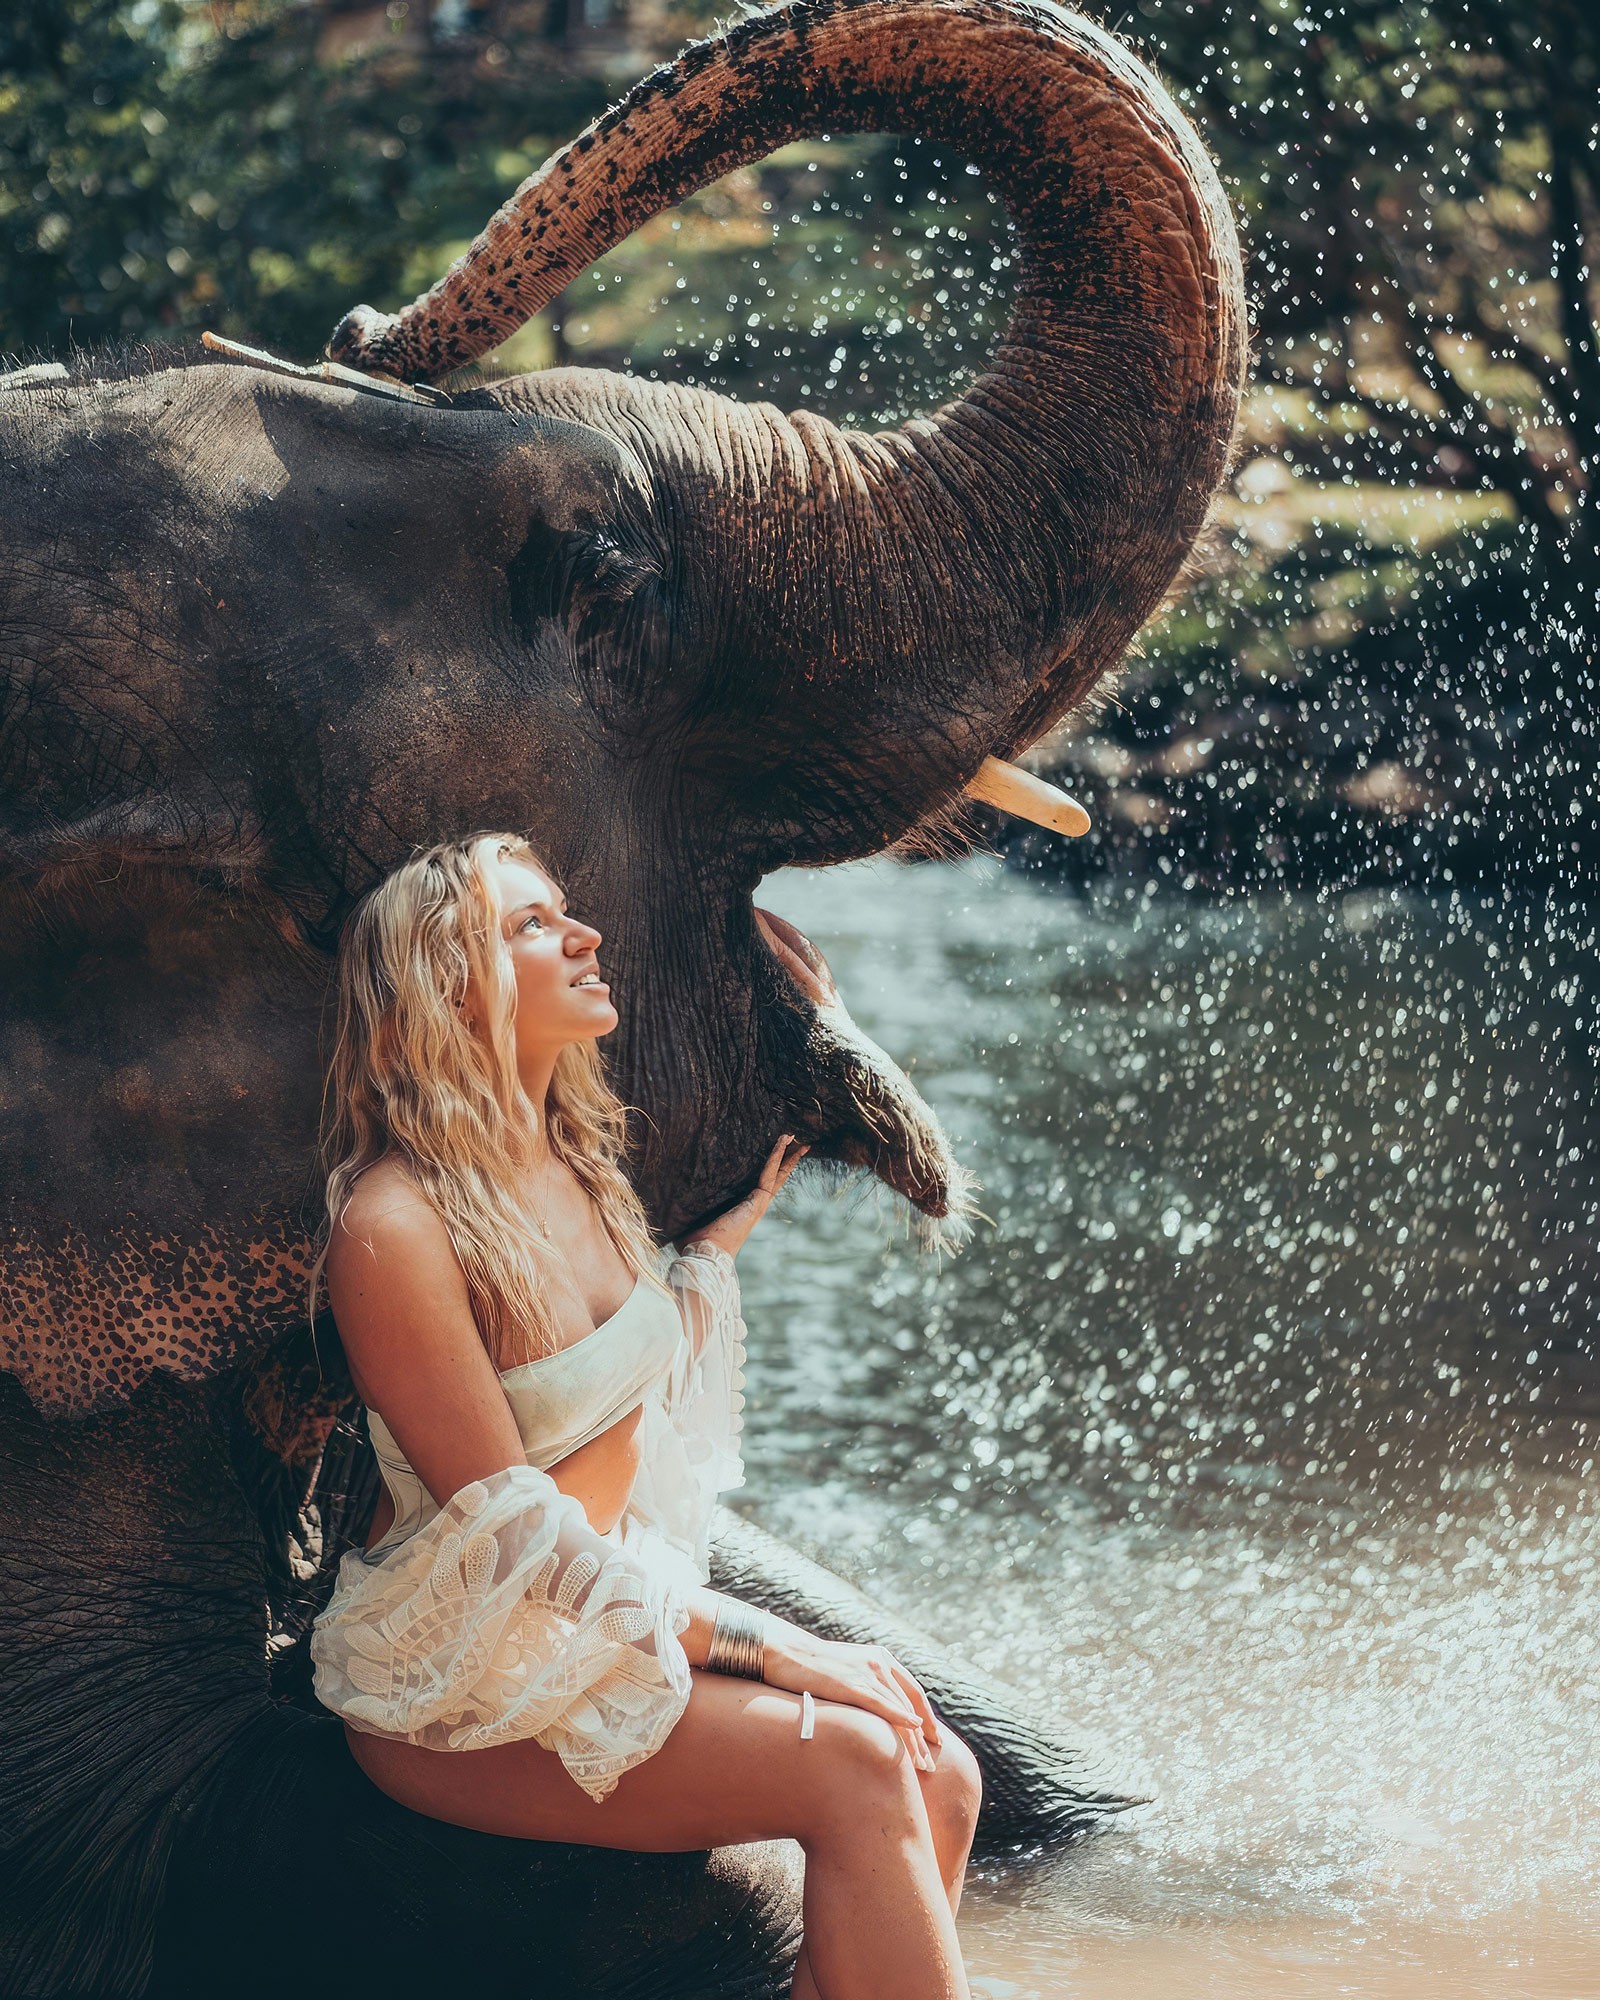 Half day photoshoot with elephants. Visit the amazing waterfall.